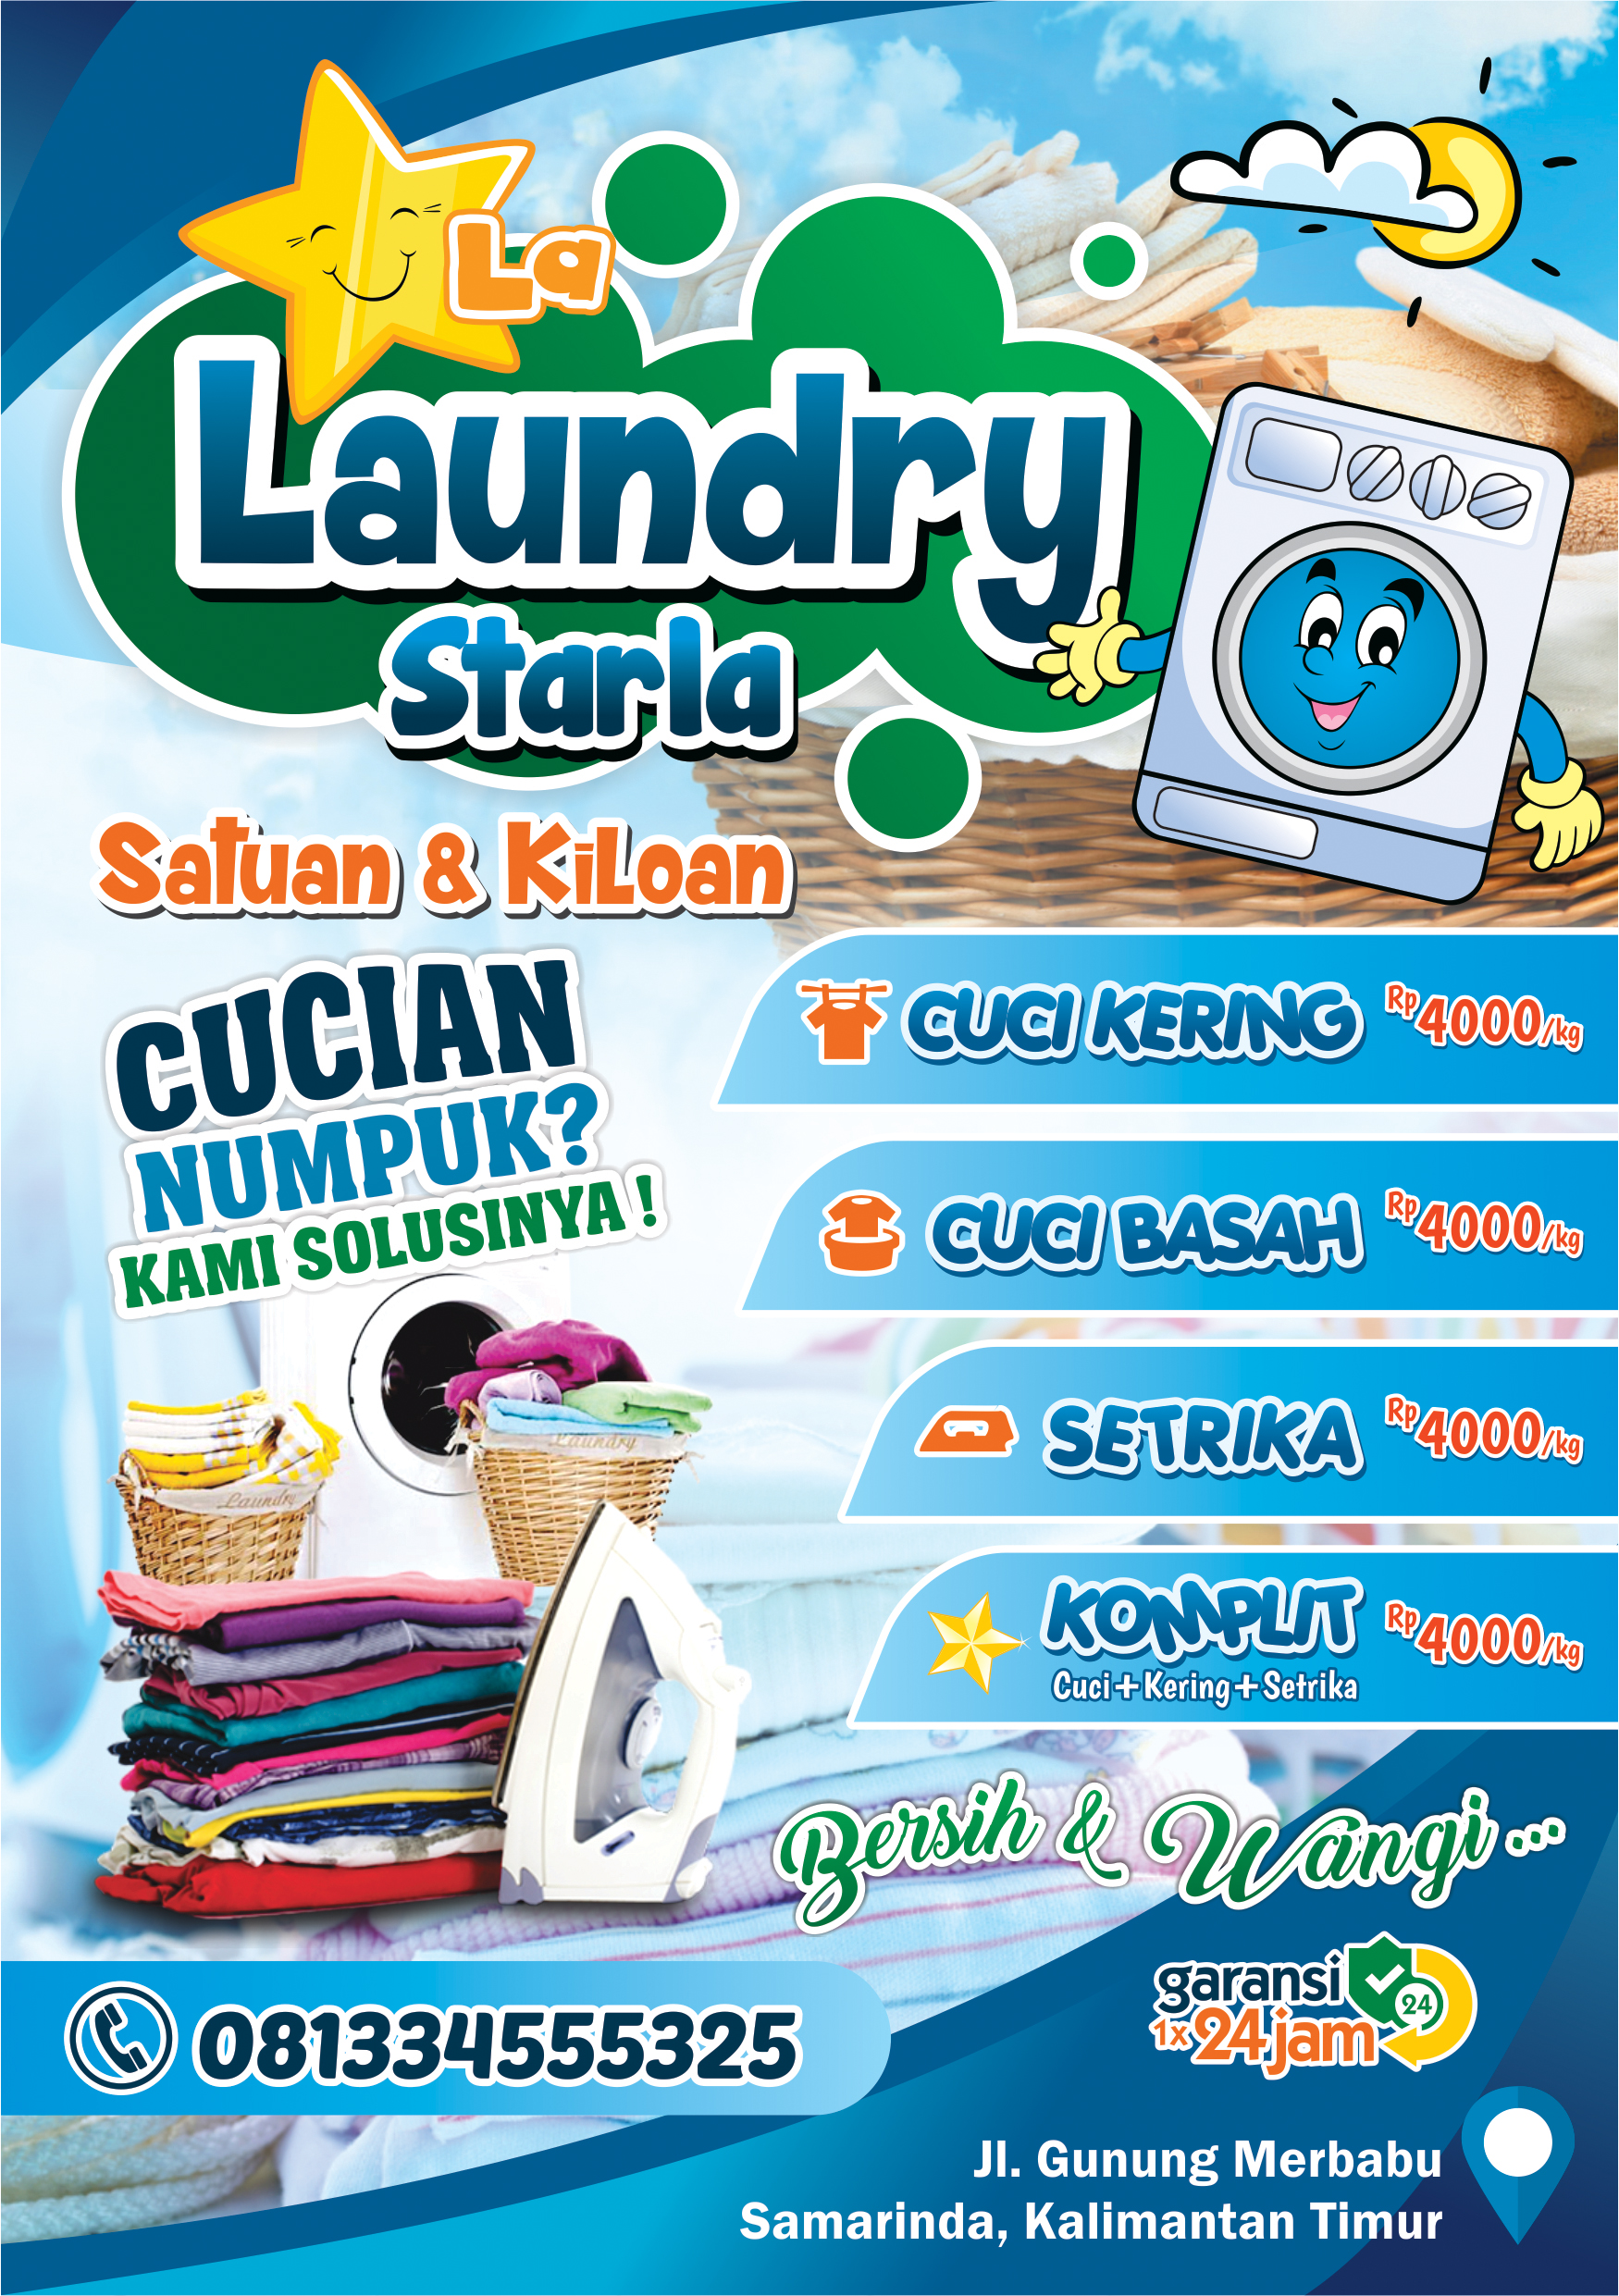 Contoh Spanduk Laundry Unik - KibrisPDR